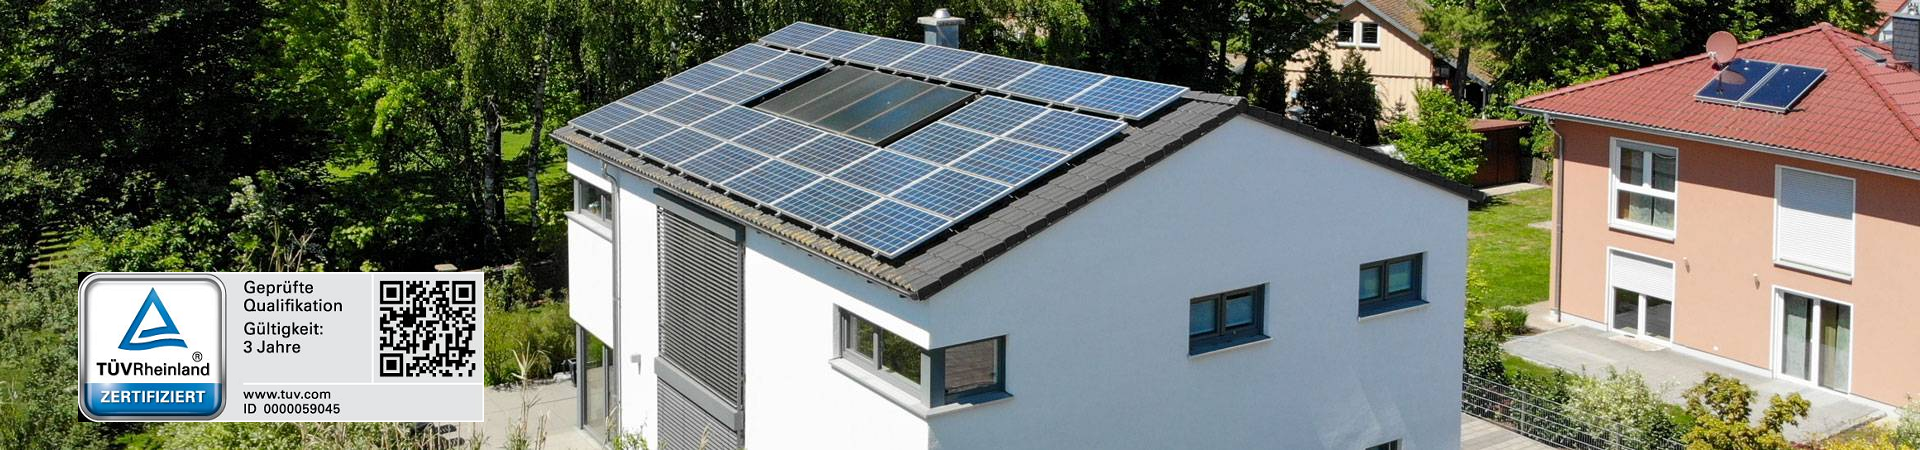 photovoltaik odenwald